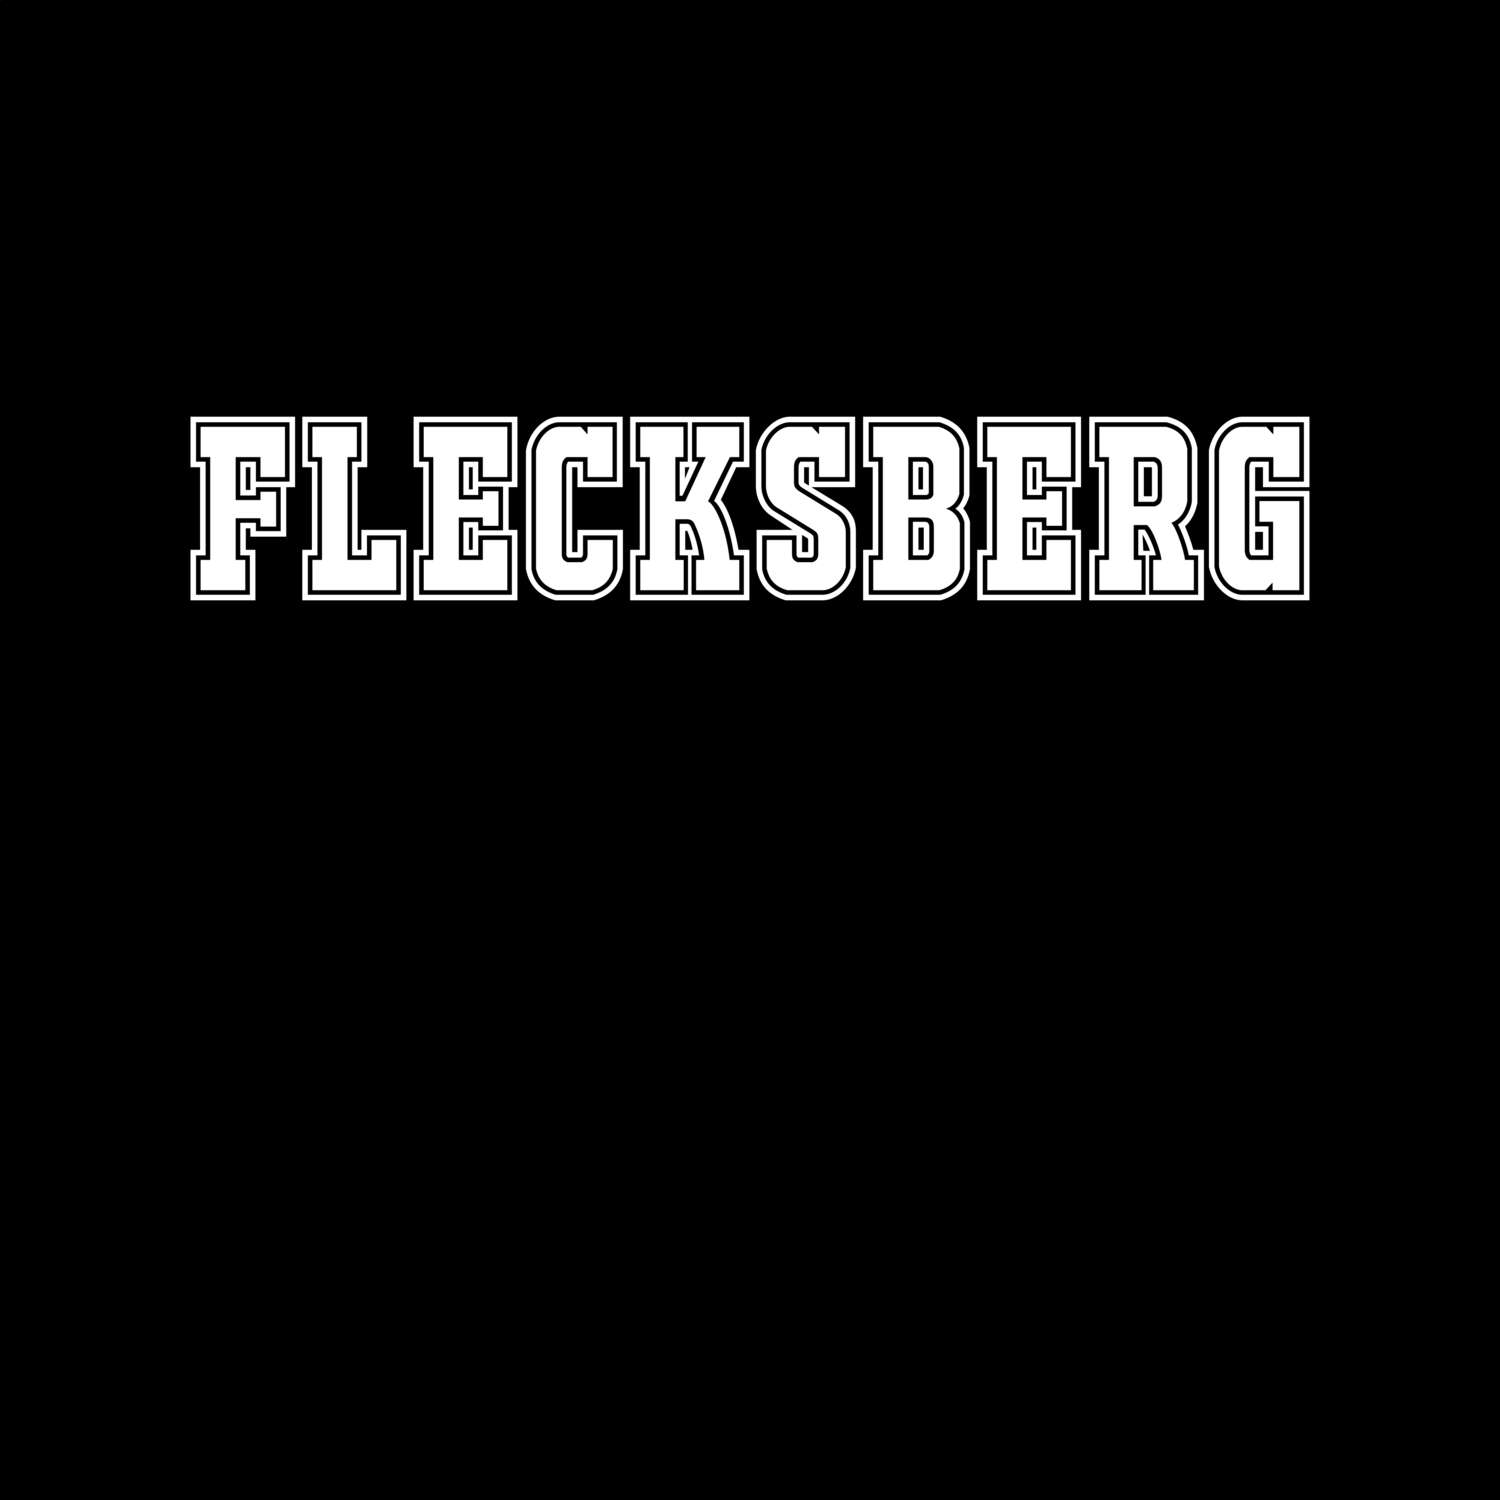 Flecksberg T-Shirt »Classic«